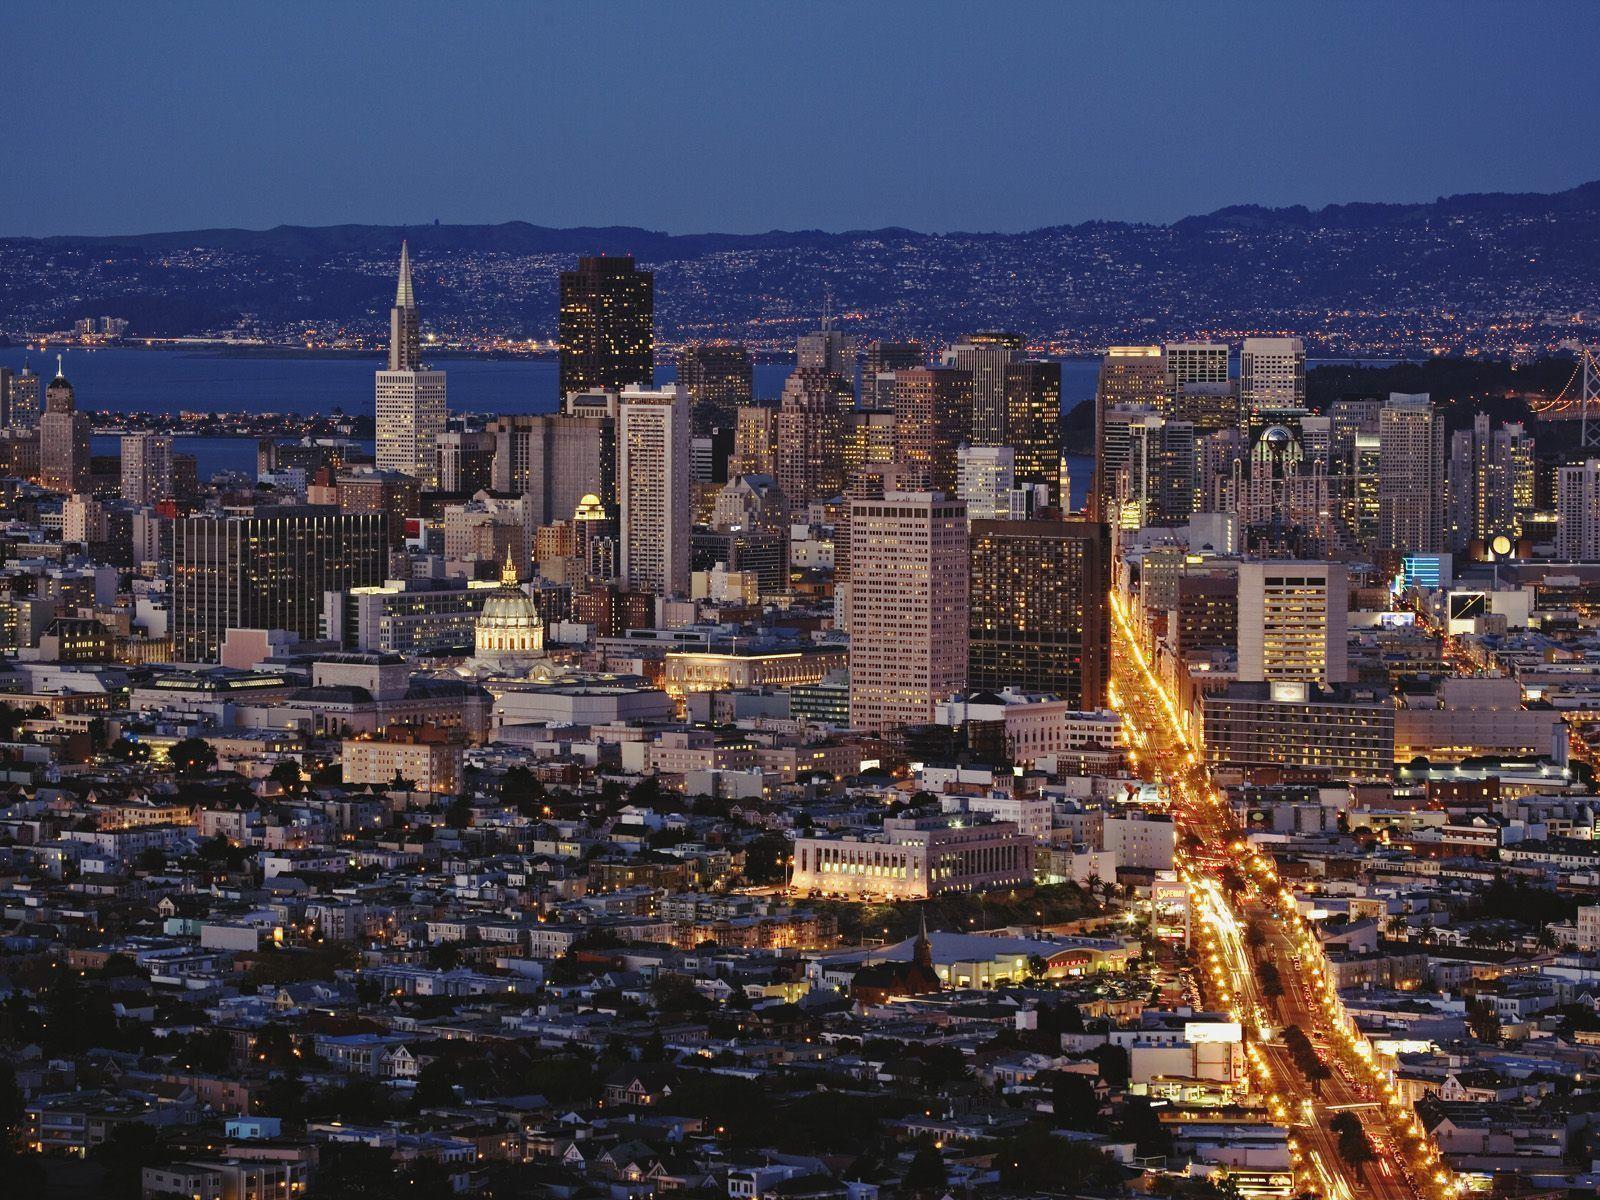 San Francisco Skyline Wallpaper Design for deskop. High Quality